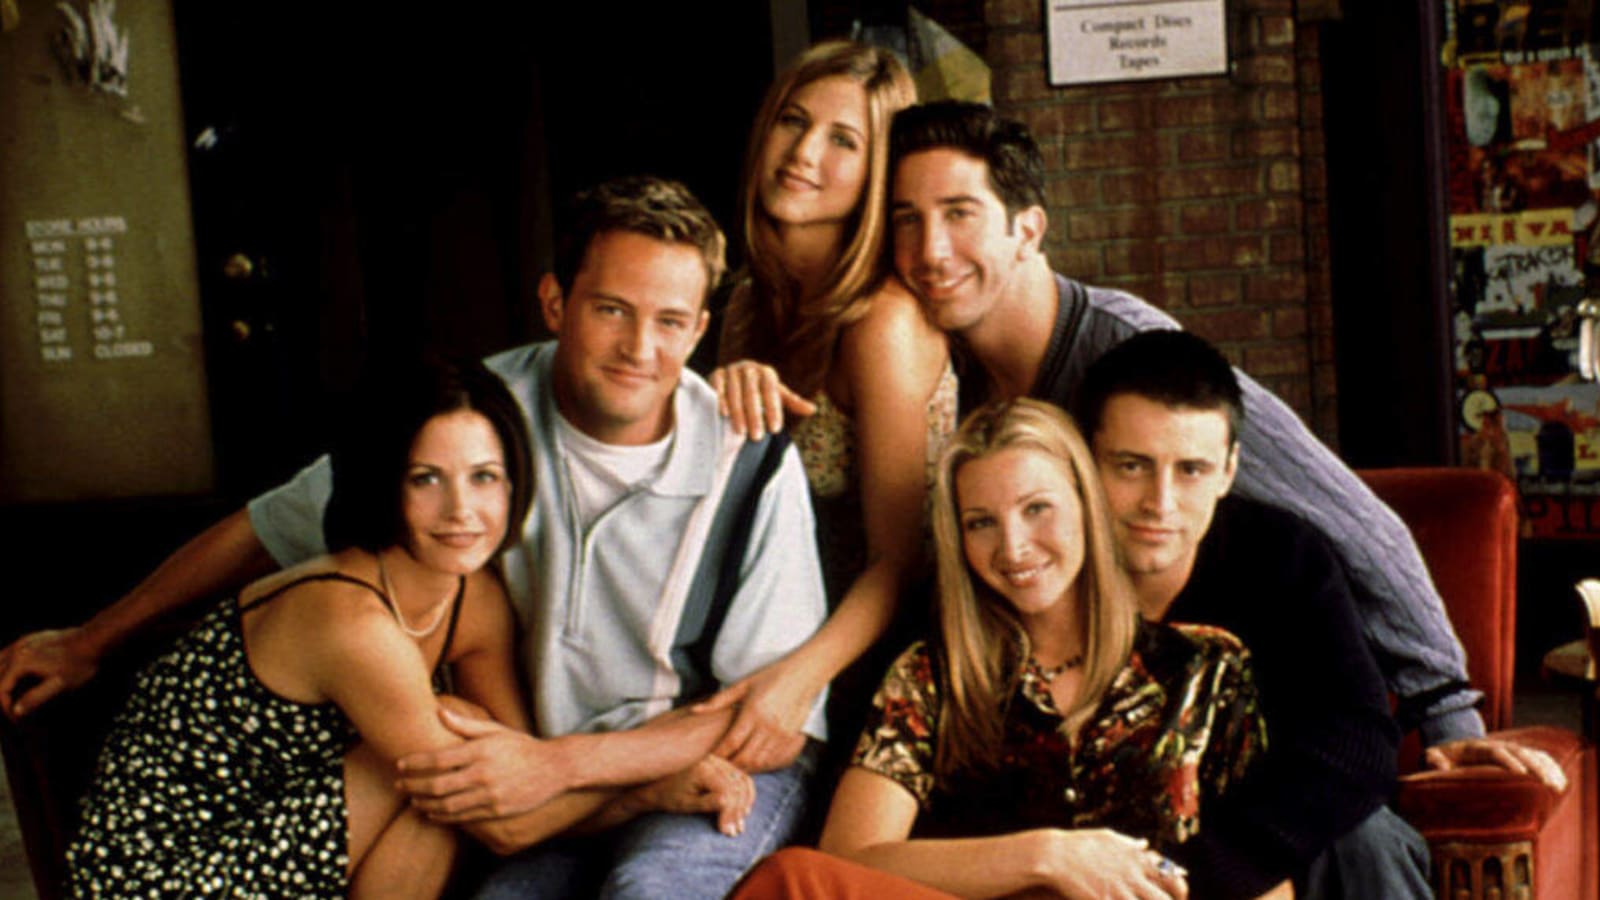 TBS Sets ‘Friends’ Marathons With Best Chandler Episodes After Matthew Perry’s Death